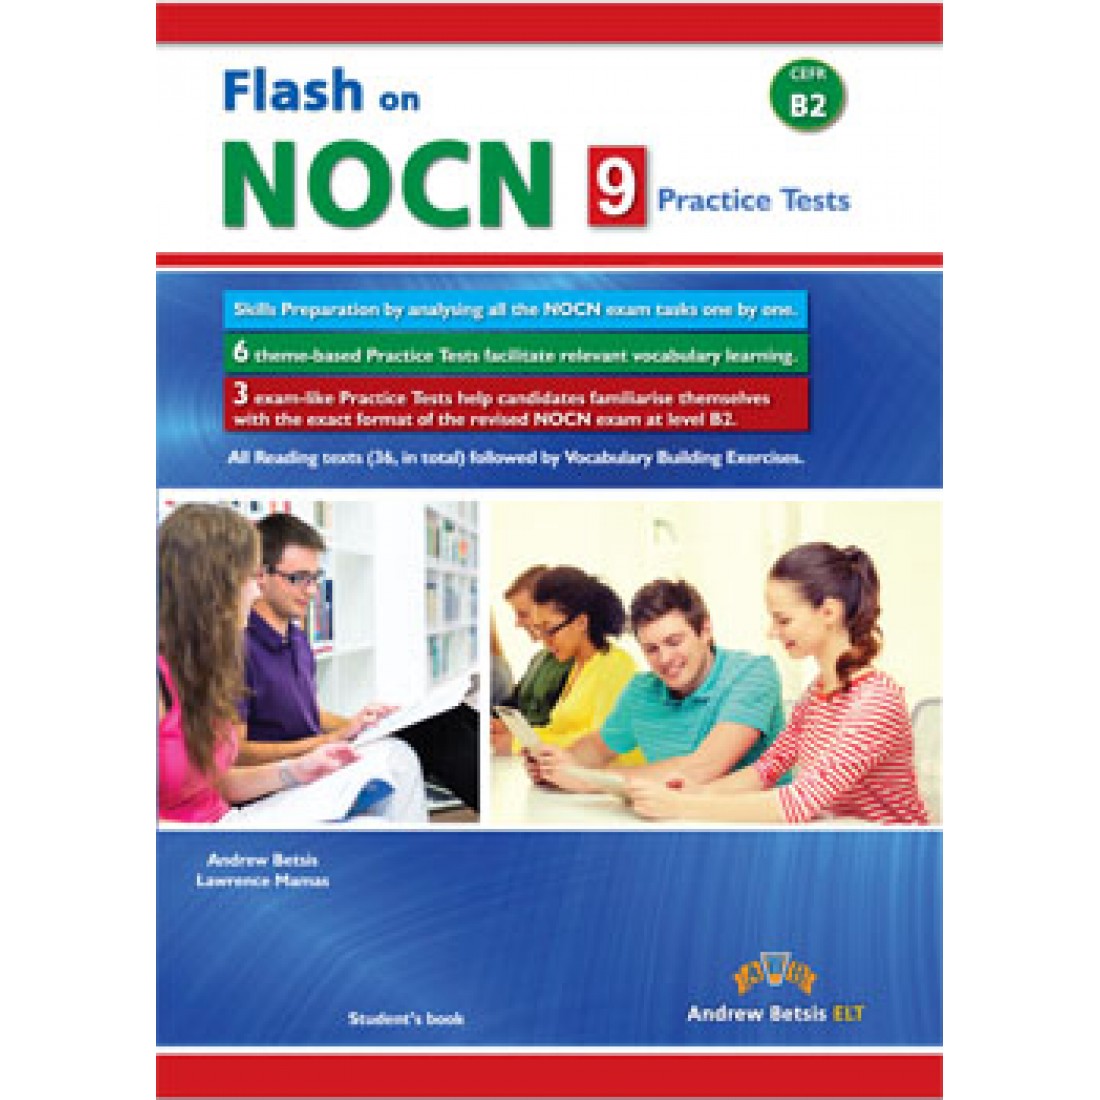 FLASH ON NOCN B2 9 PRACTICE TESTS MP3 CD 2017